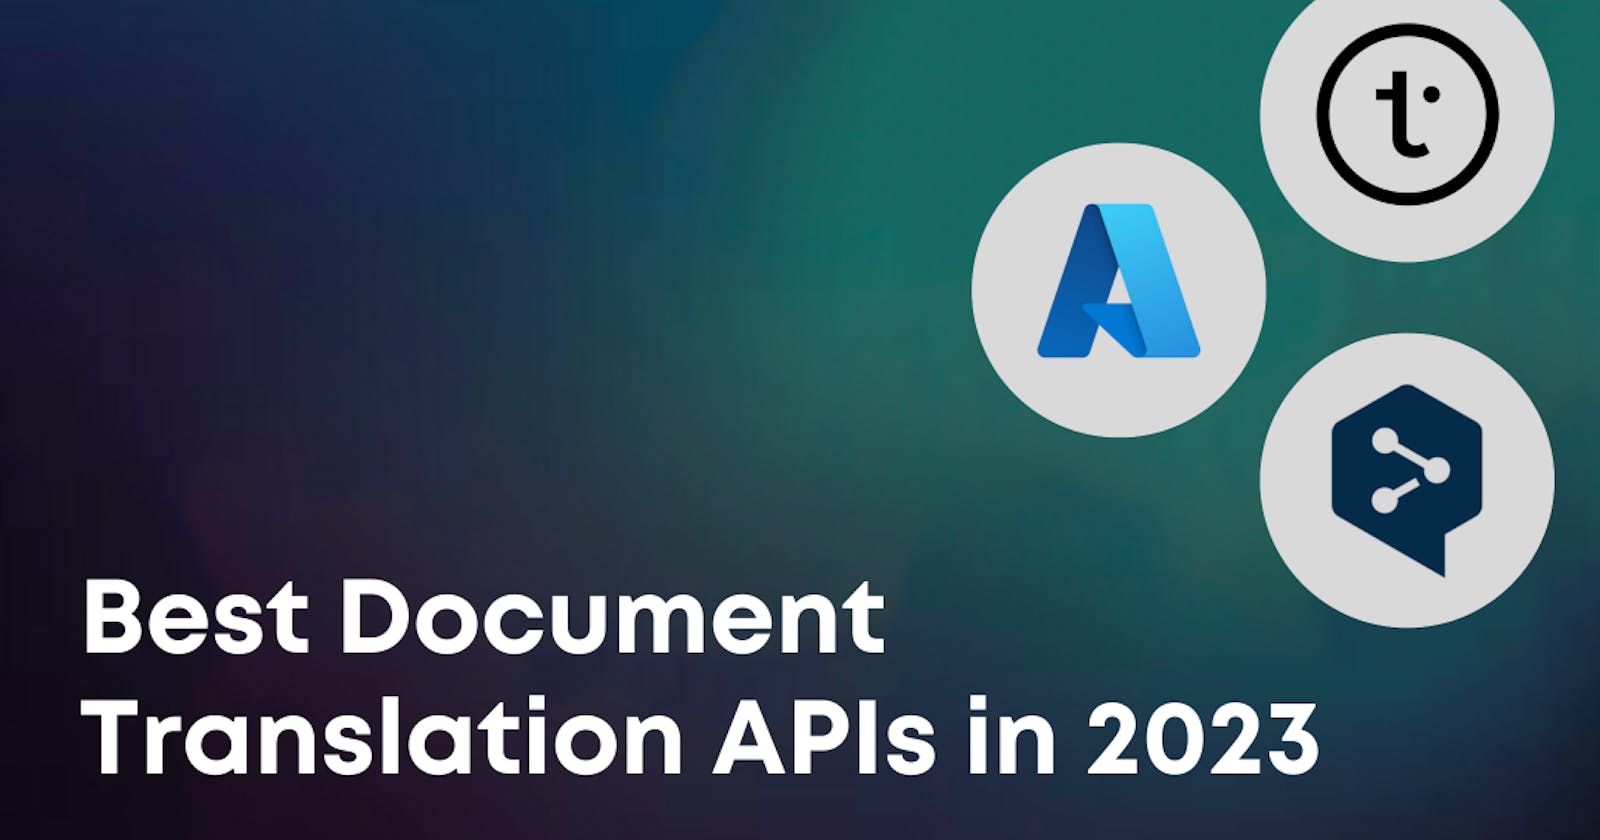 Best Document Translation APIs in 2023